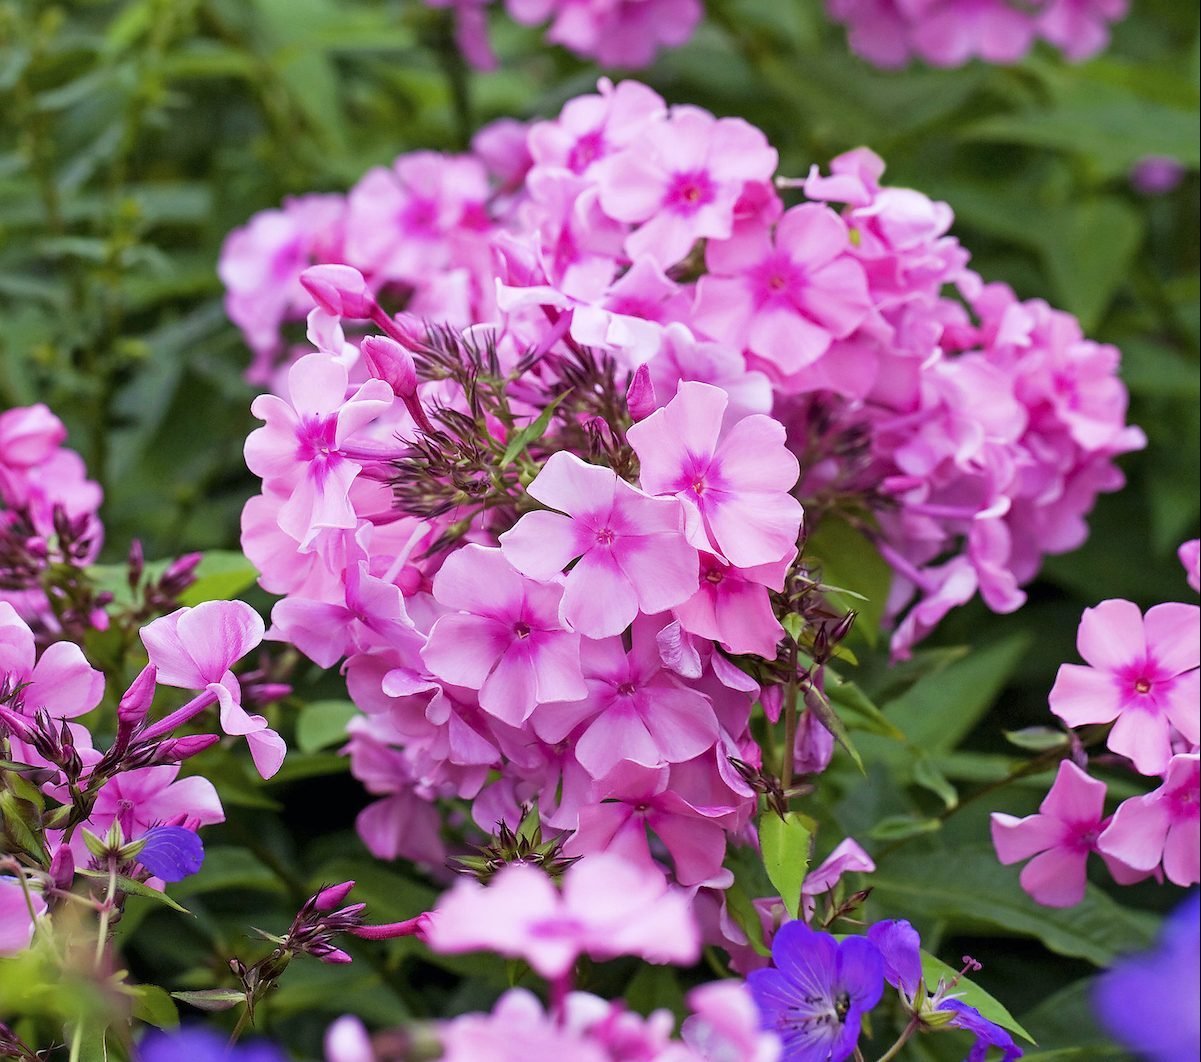 Grow Garden Phlox for Jumbles of Fragrant Blooms